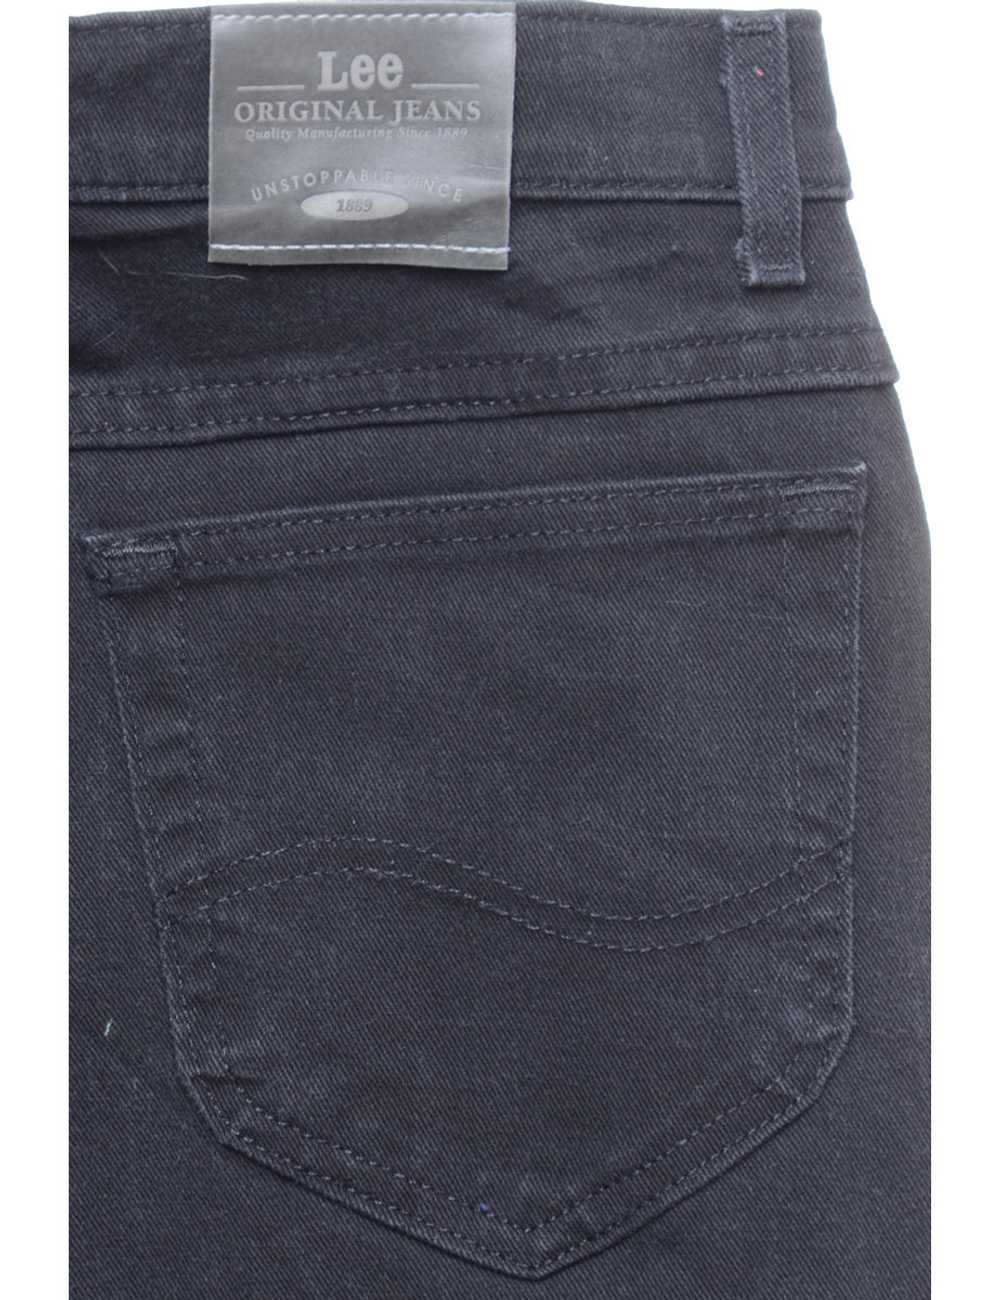 Black Lee Jeans - W32 L32 - image 4